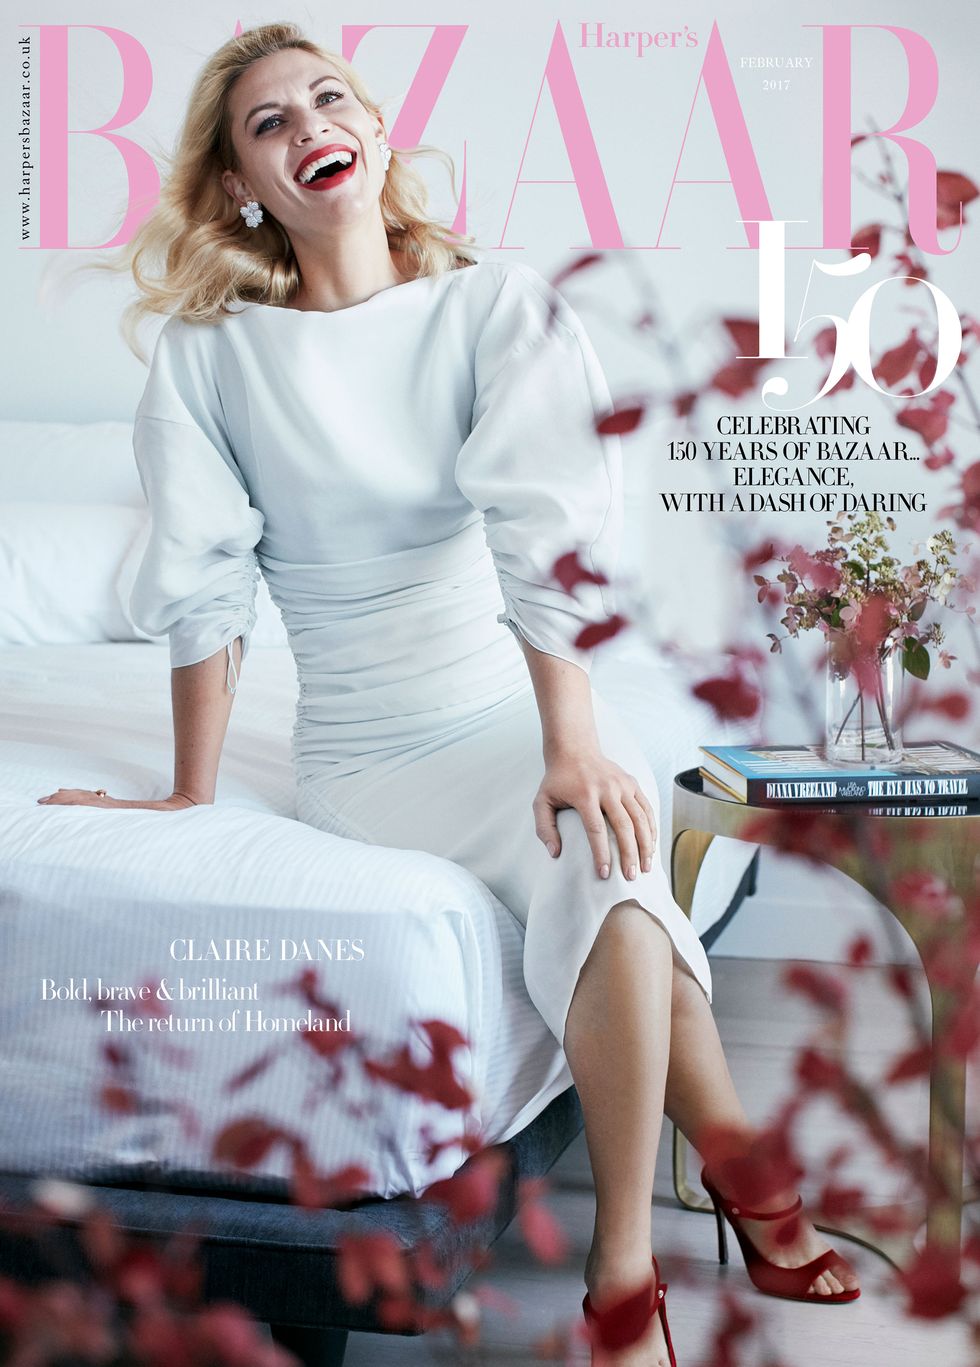 Claire Danes for Harper's Bazaar February 2016